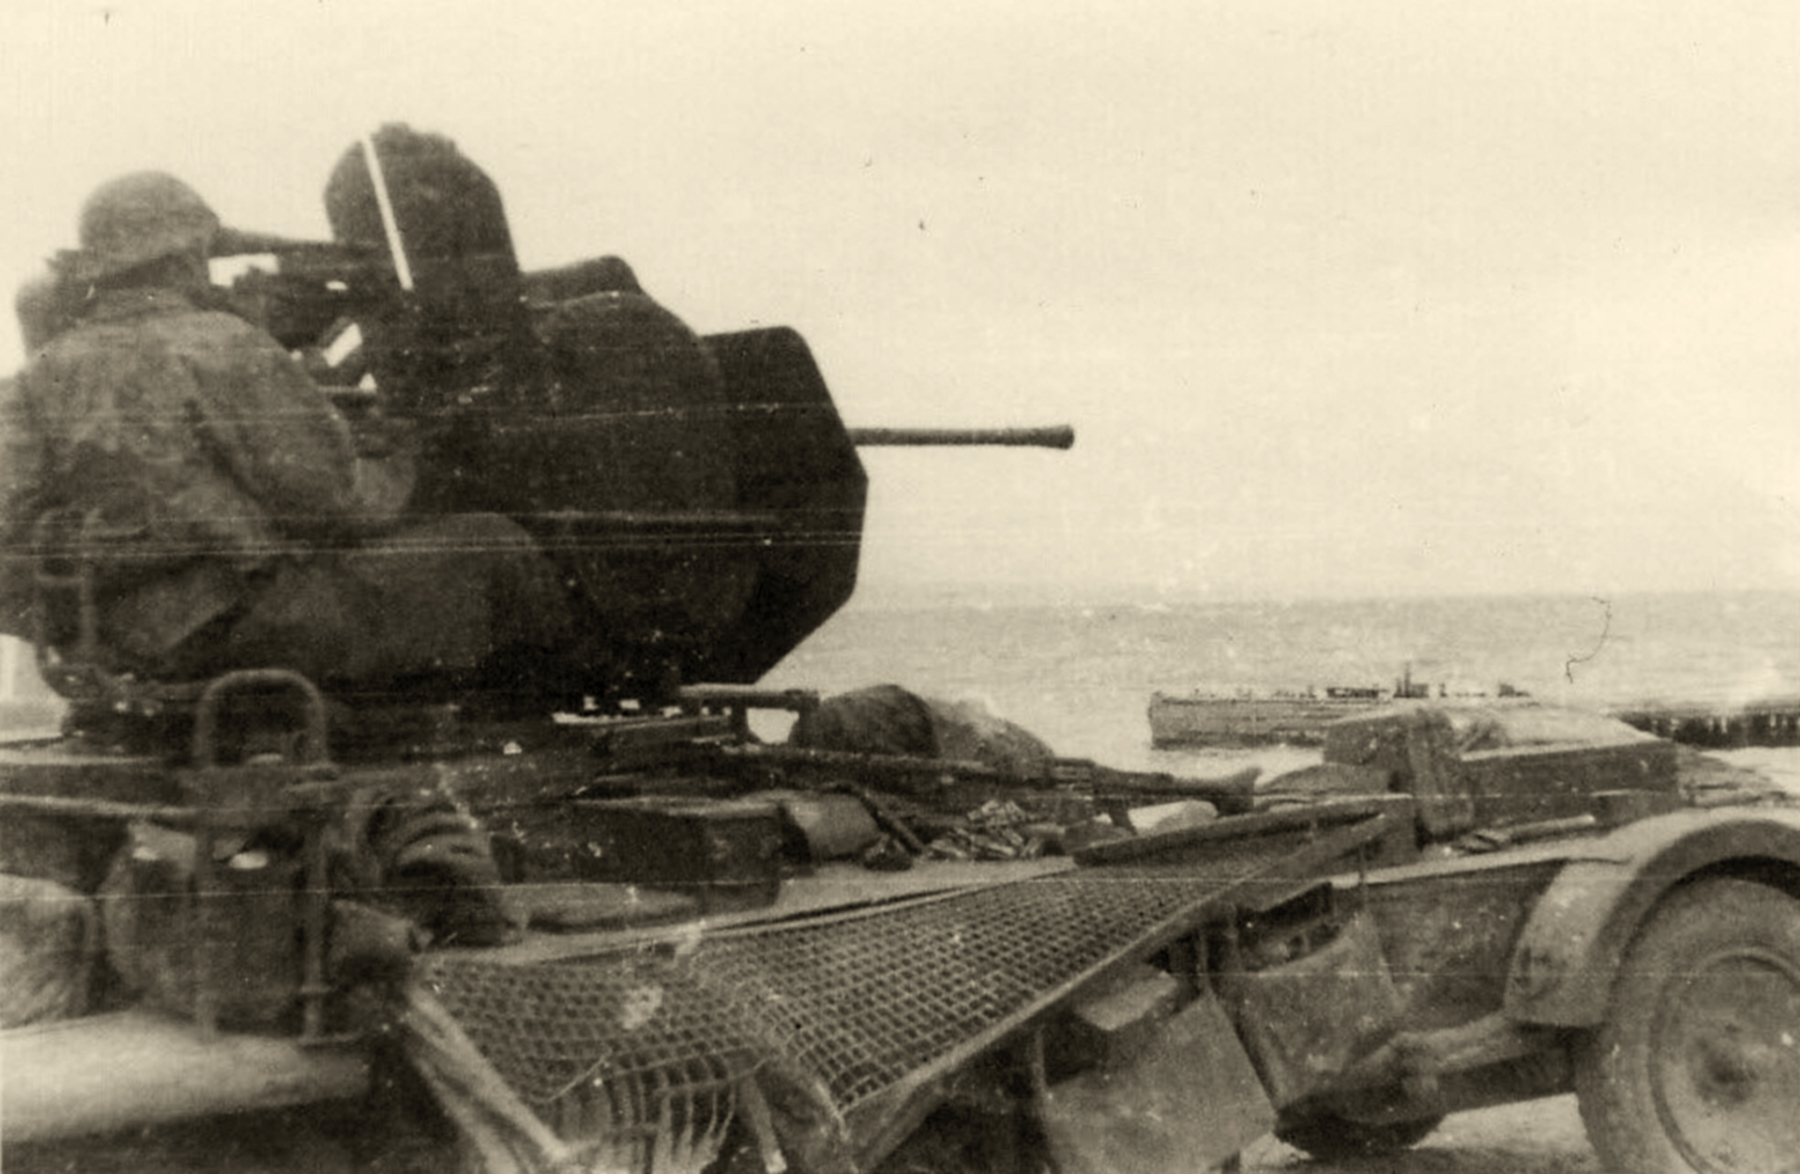 Fla Bataillon 22 (mot) with 2cm Flak 38 SdKfz 11 during siege of Sevastopol 1941 ebay 02